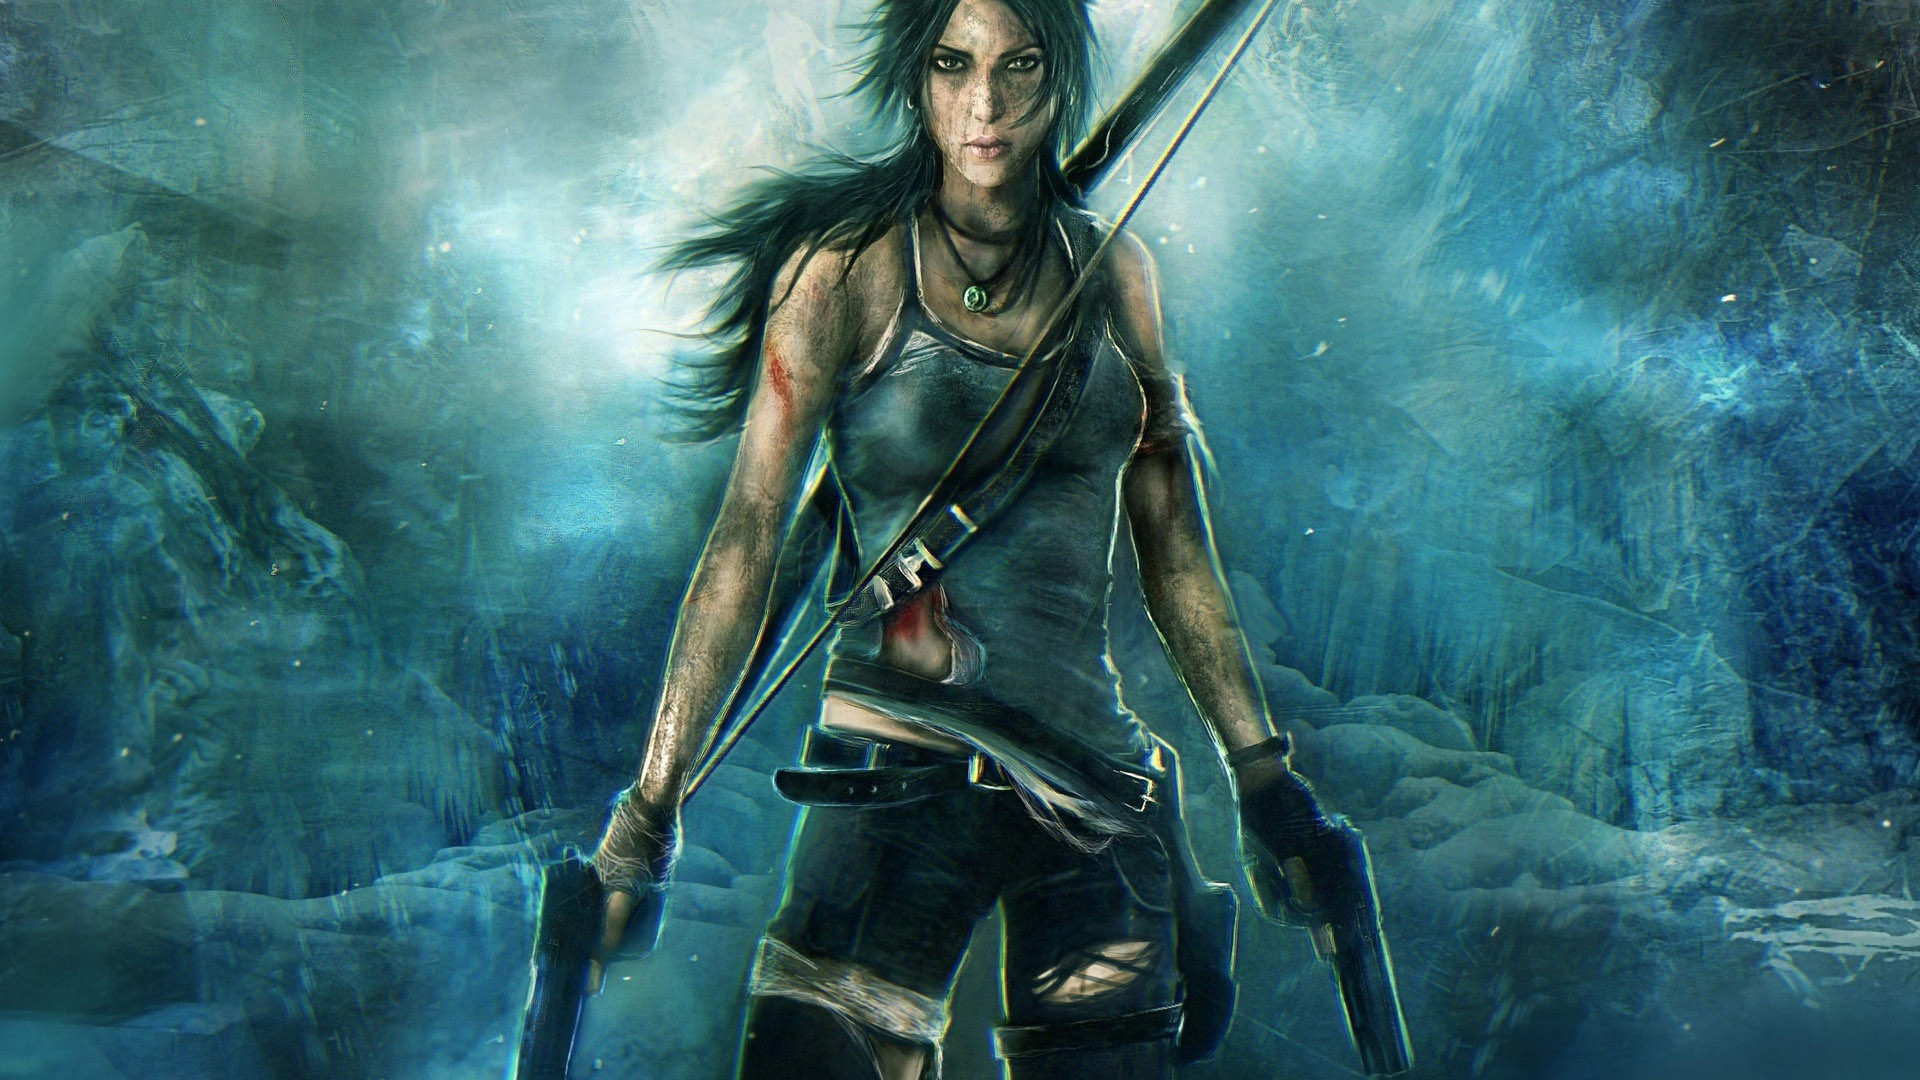 Lara Croft Wallpaper Hd 79 Images